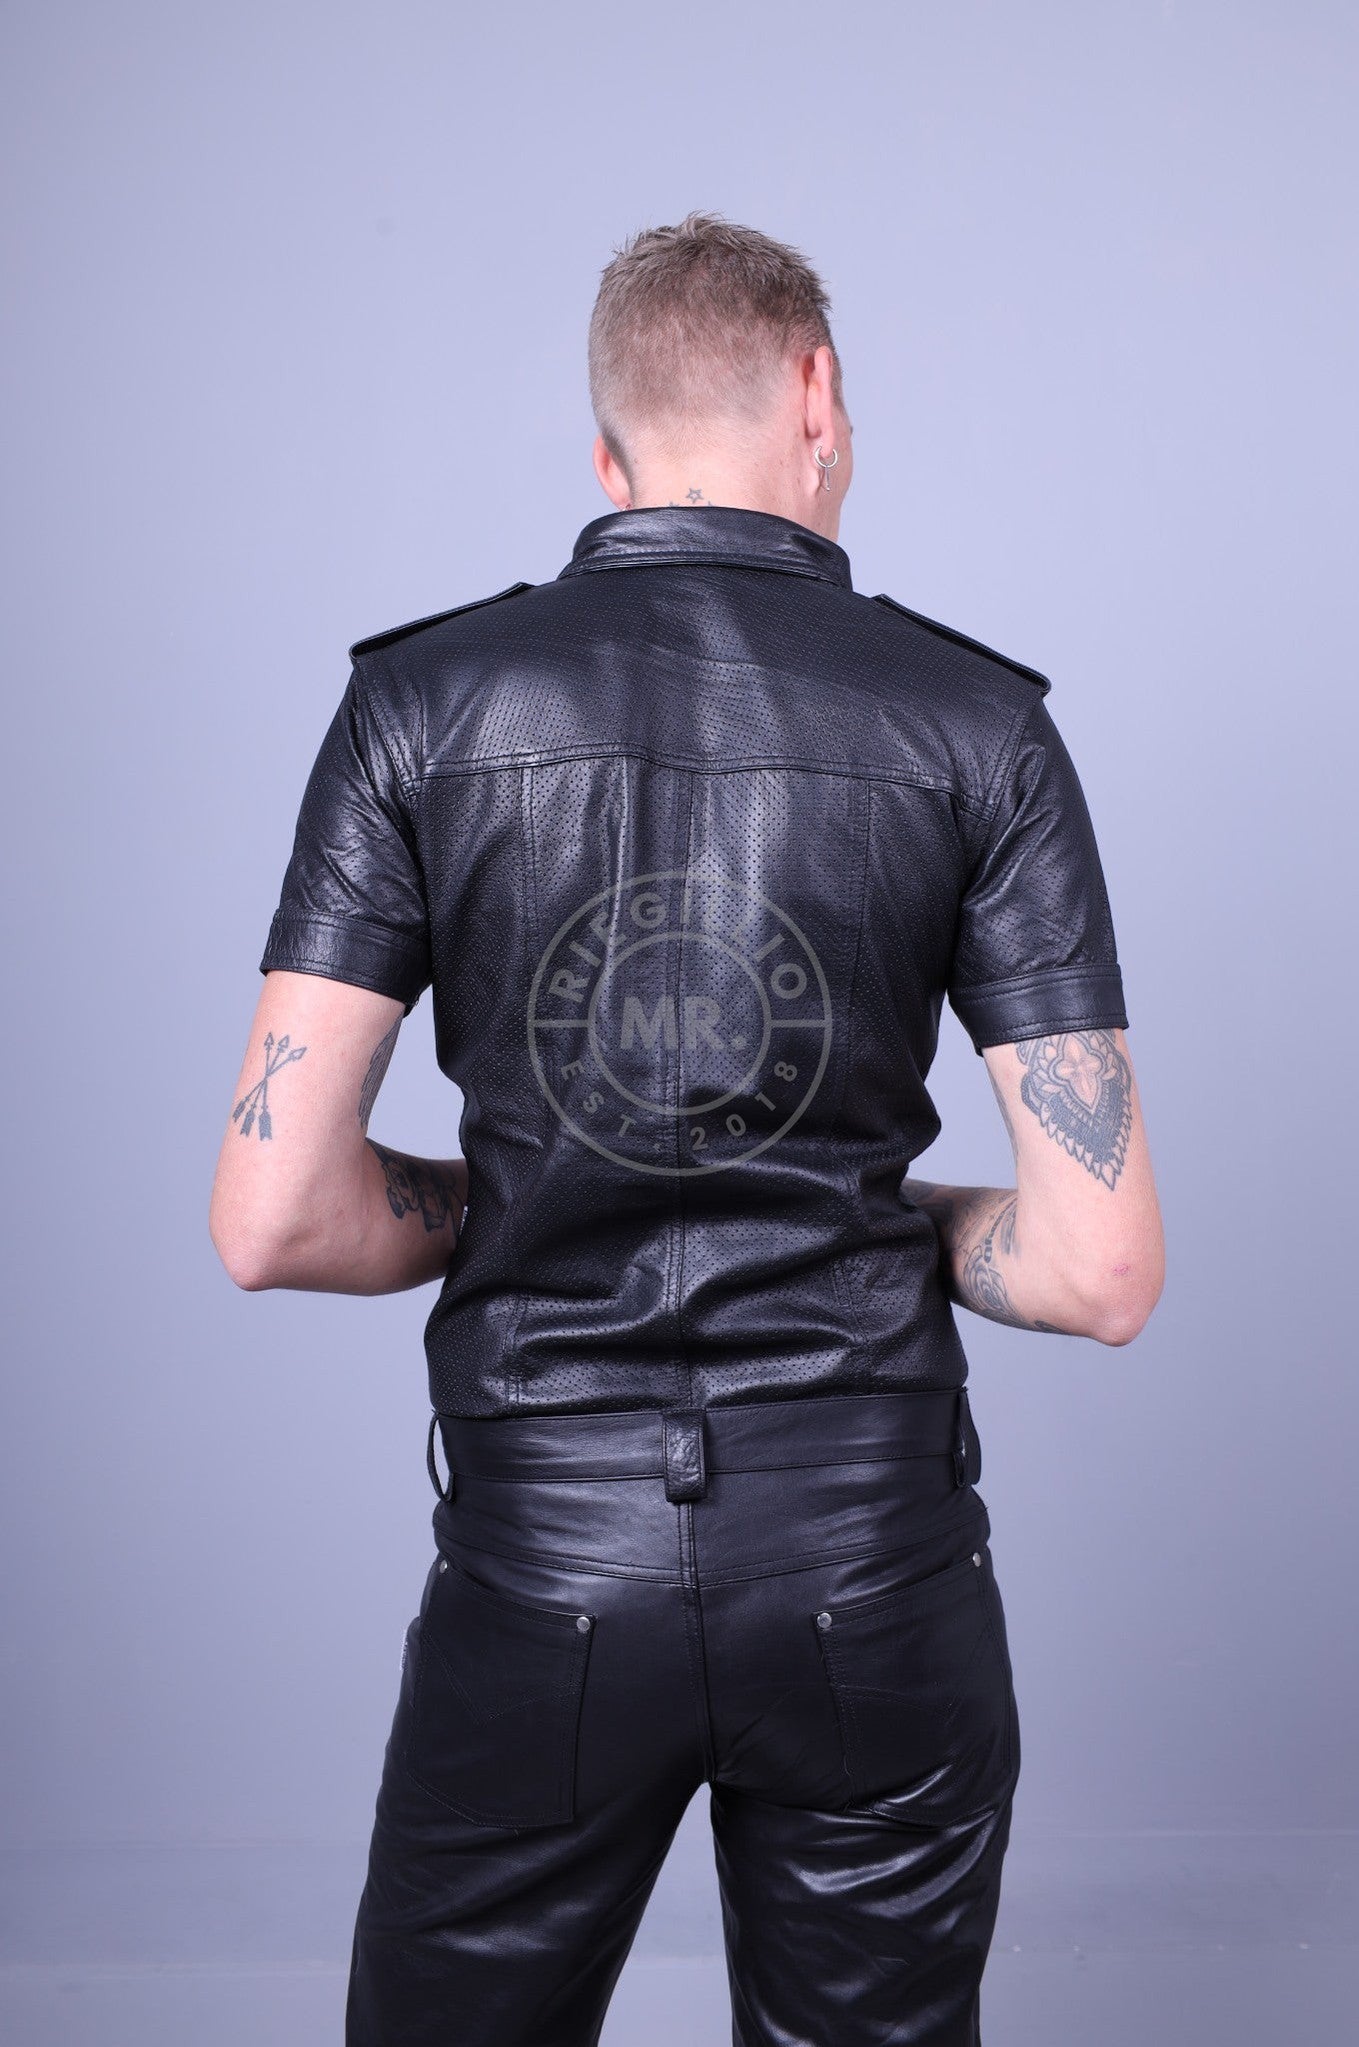 Black Leather Perforated Shirt at MR. Riegillio